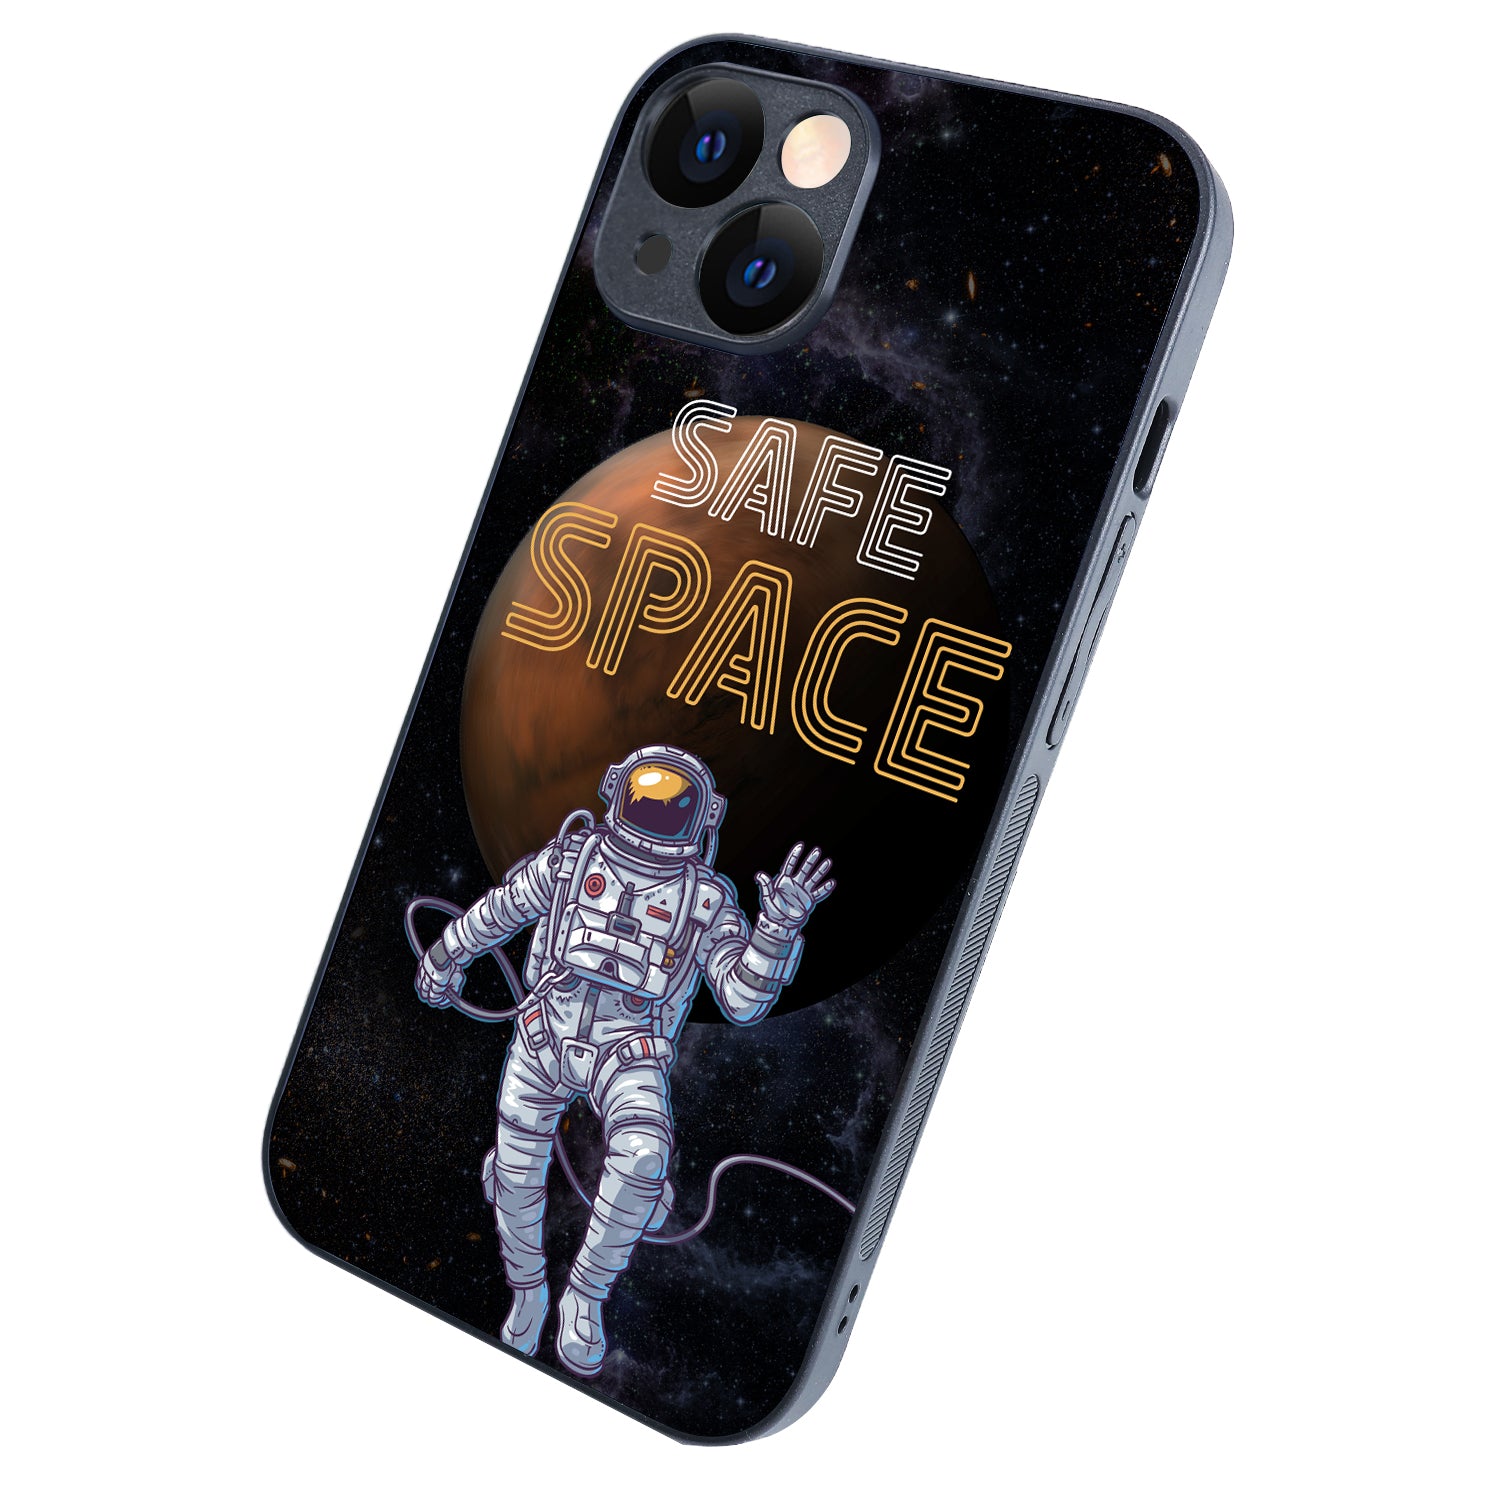 Safe Space iPhone 14 Case